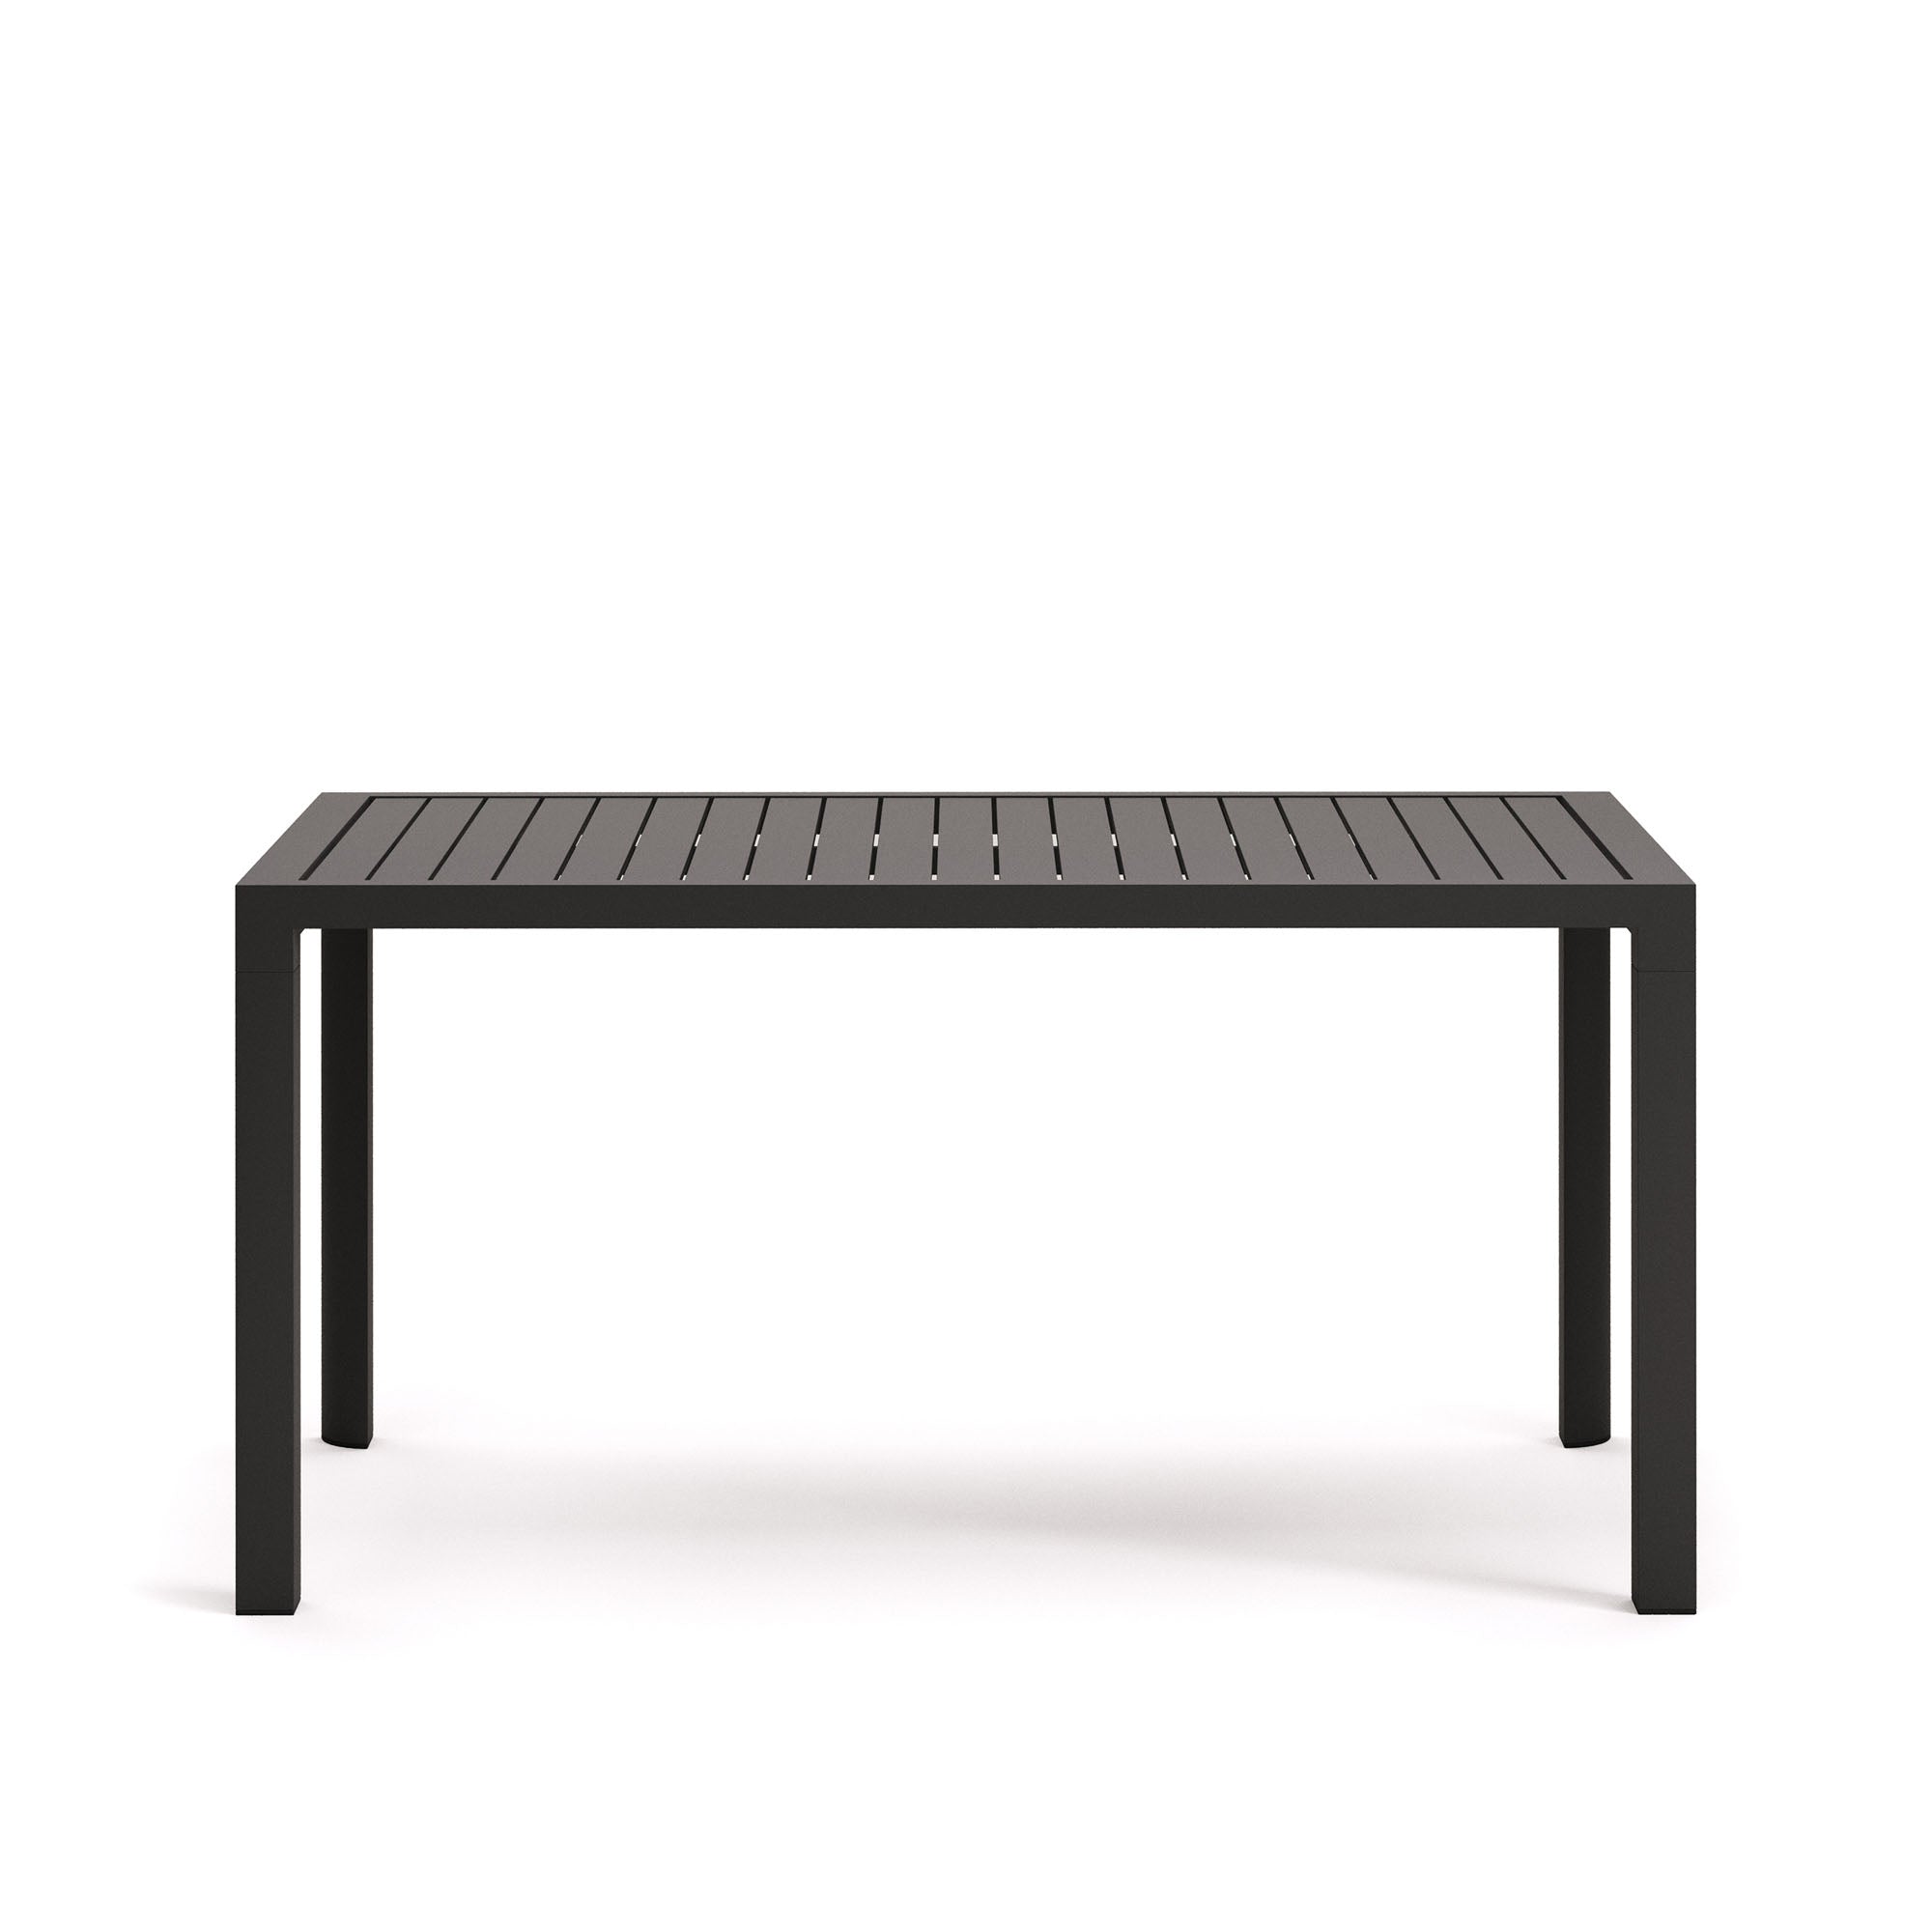 Culip aluminium outdoor table in powder coated grey finish, 150 x 77 cm